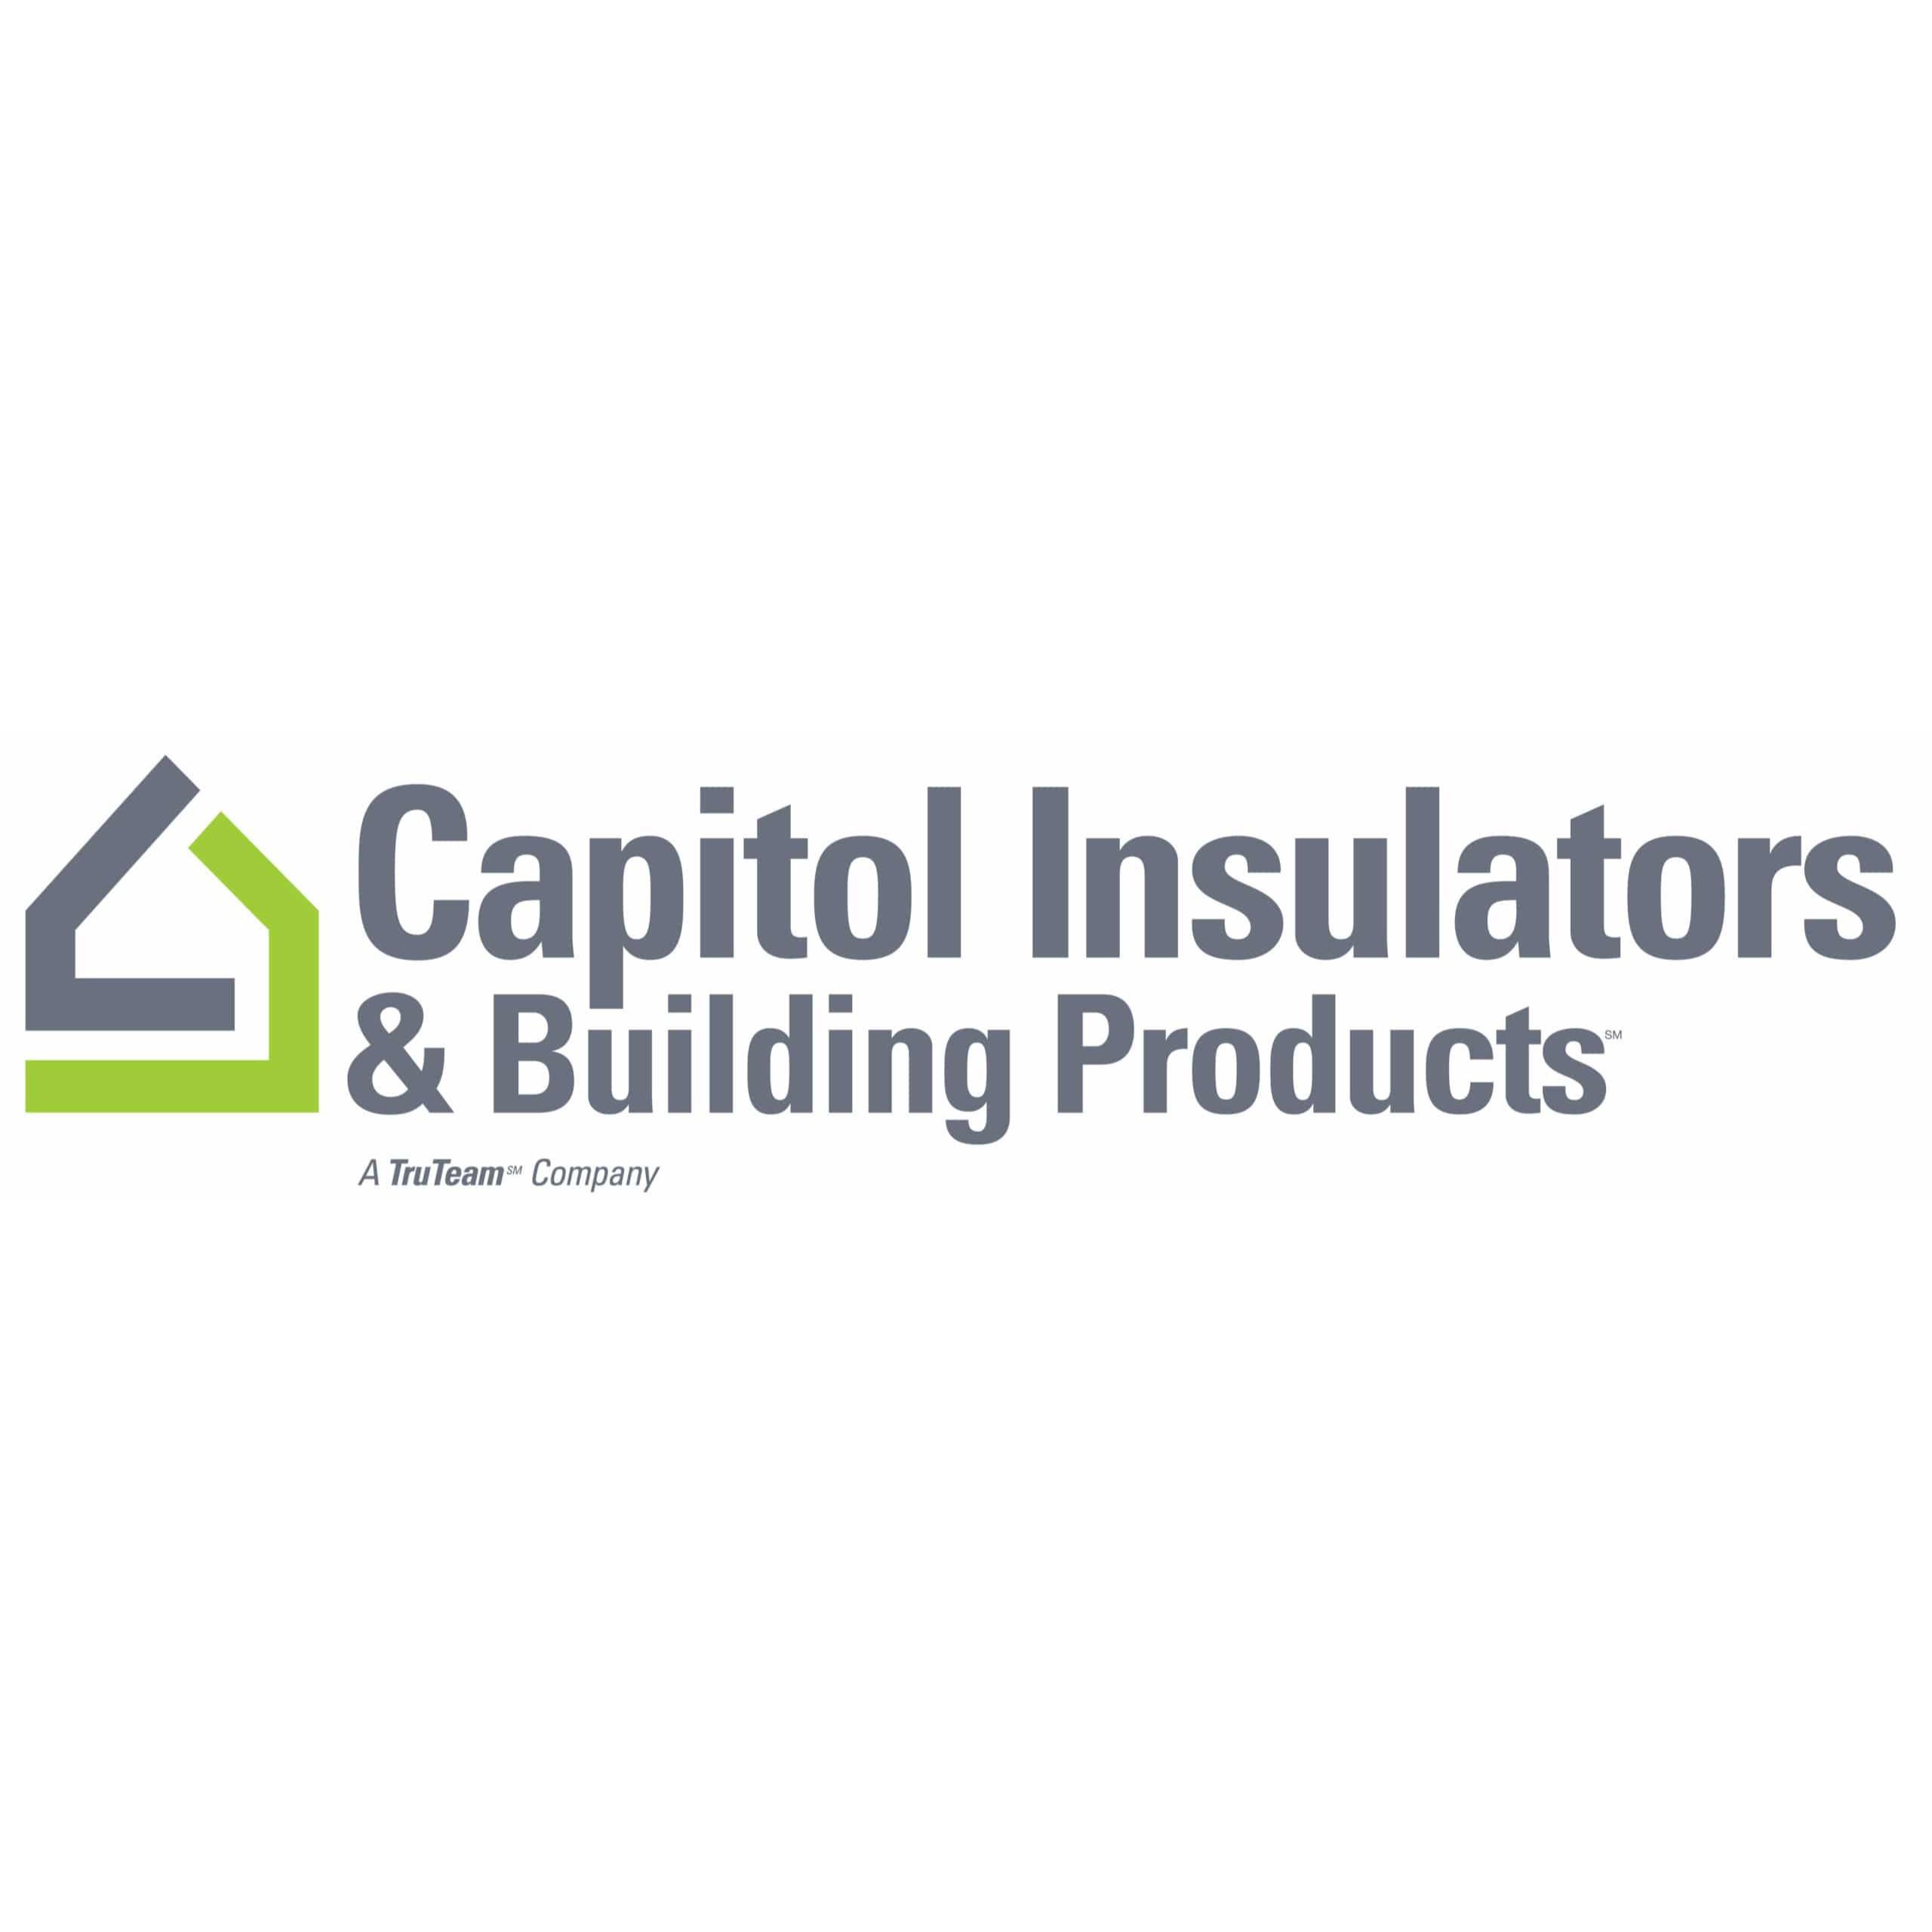 Capitol Insulators & Building Products